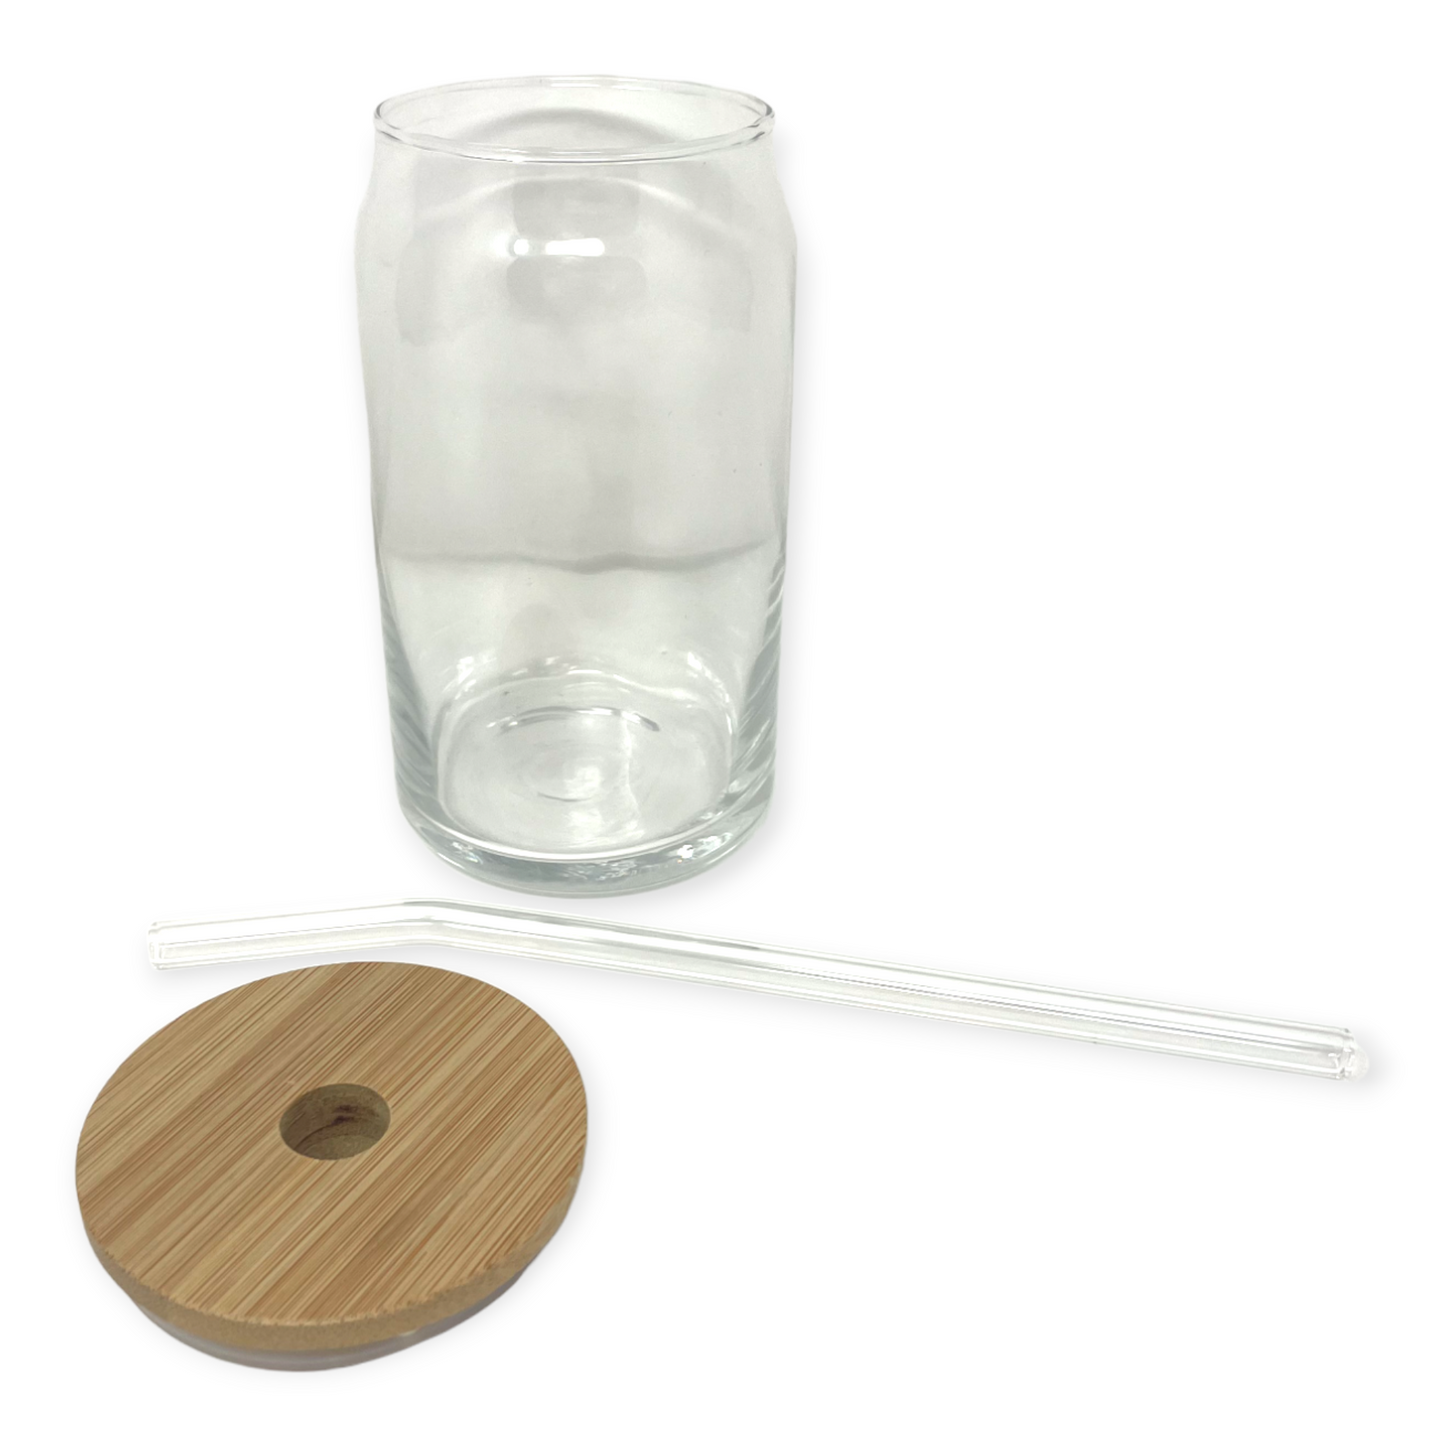 Taza con tapa de bambú y pajita | Vaso